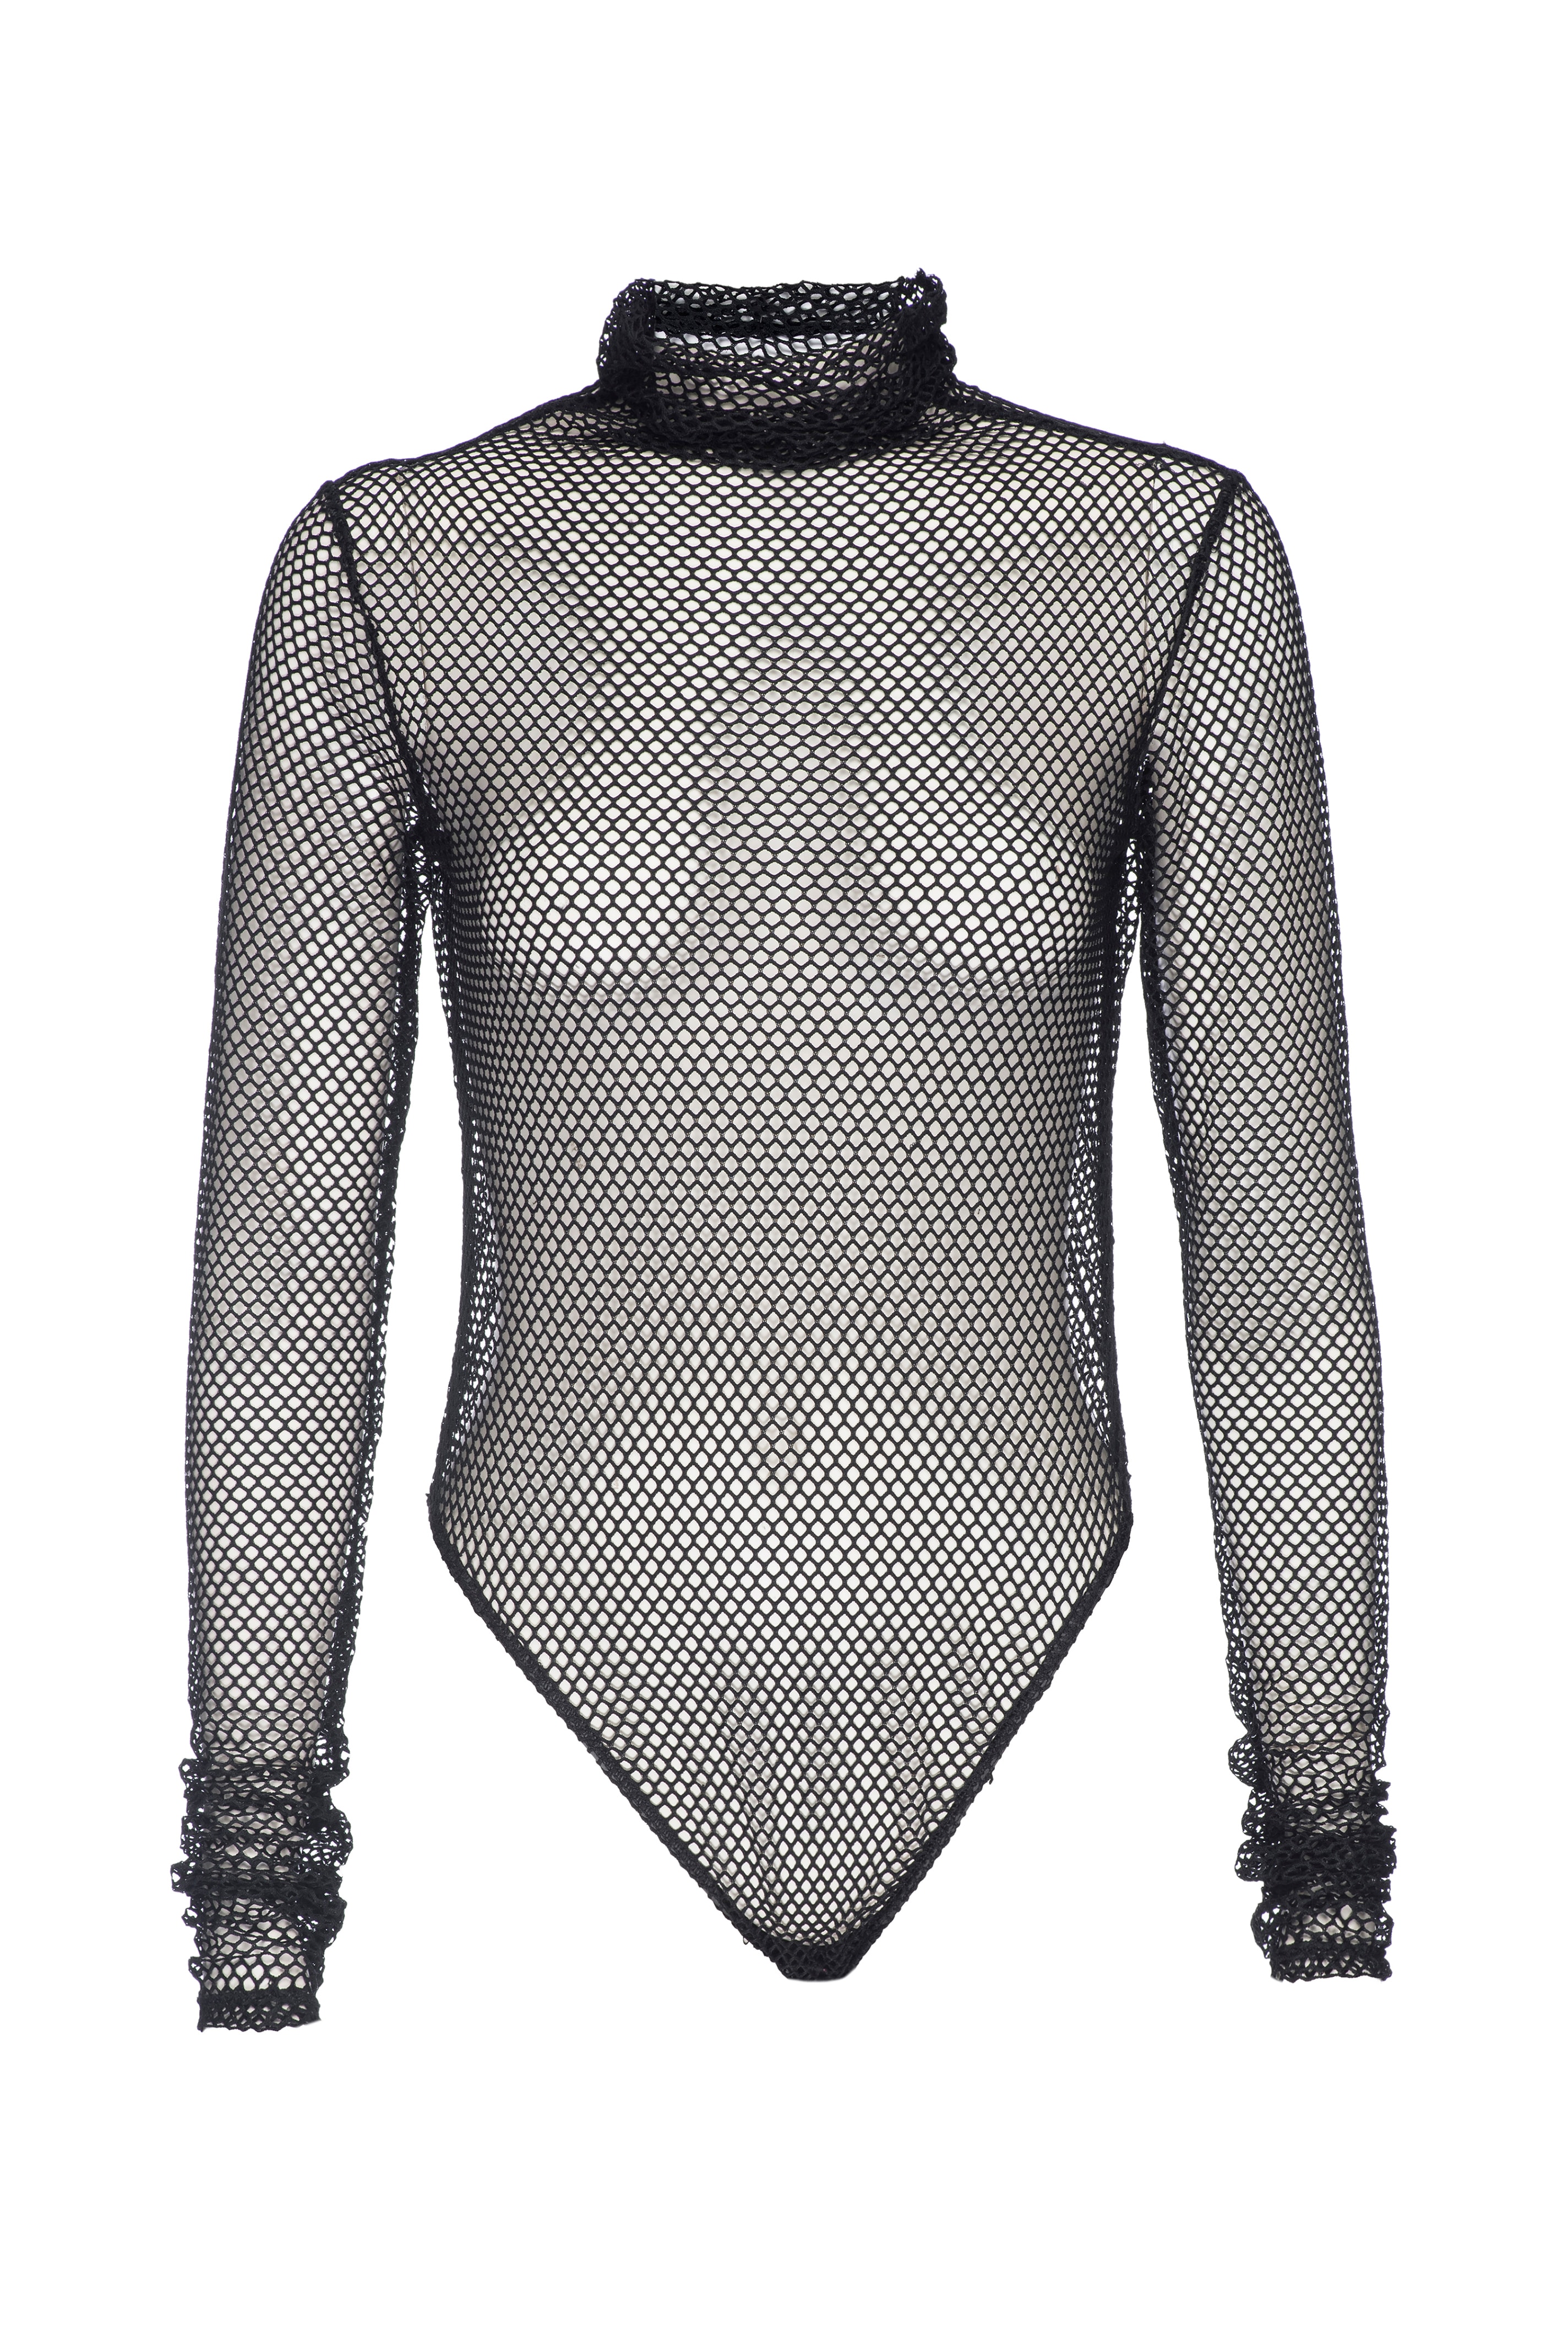 Khloe Kardashian Good American Body Suit Collection Mesh Fishnet Denim Size Inclusive